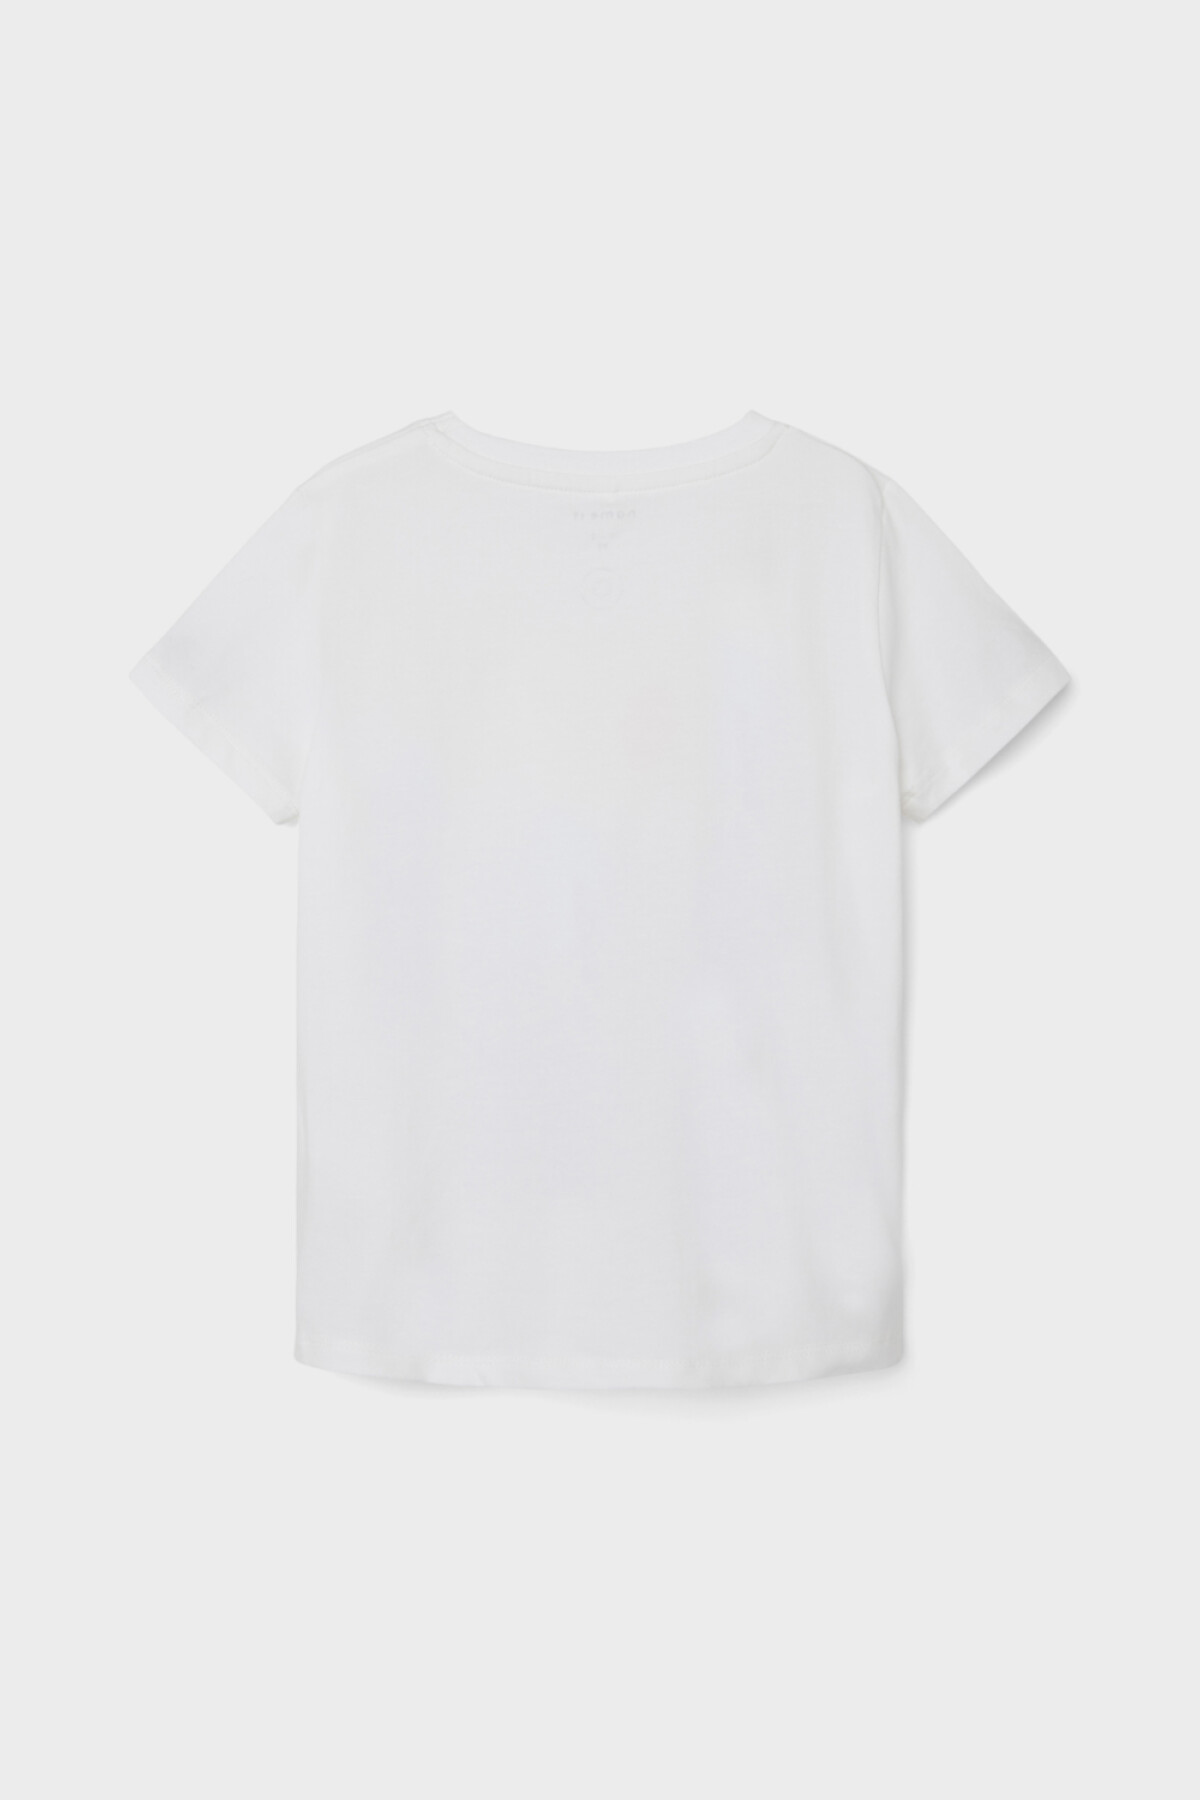 Camiseta Hep Bright White